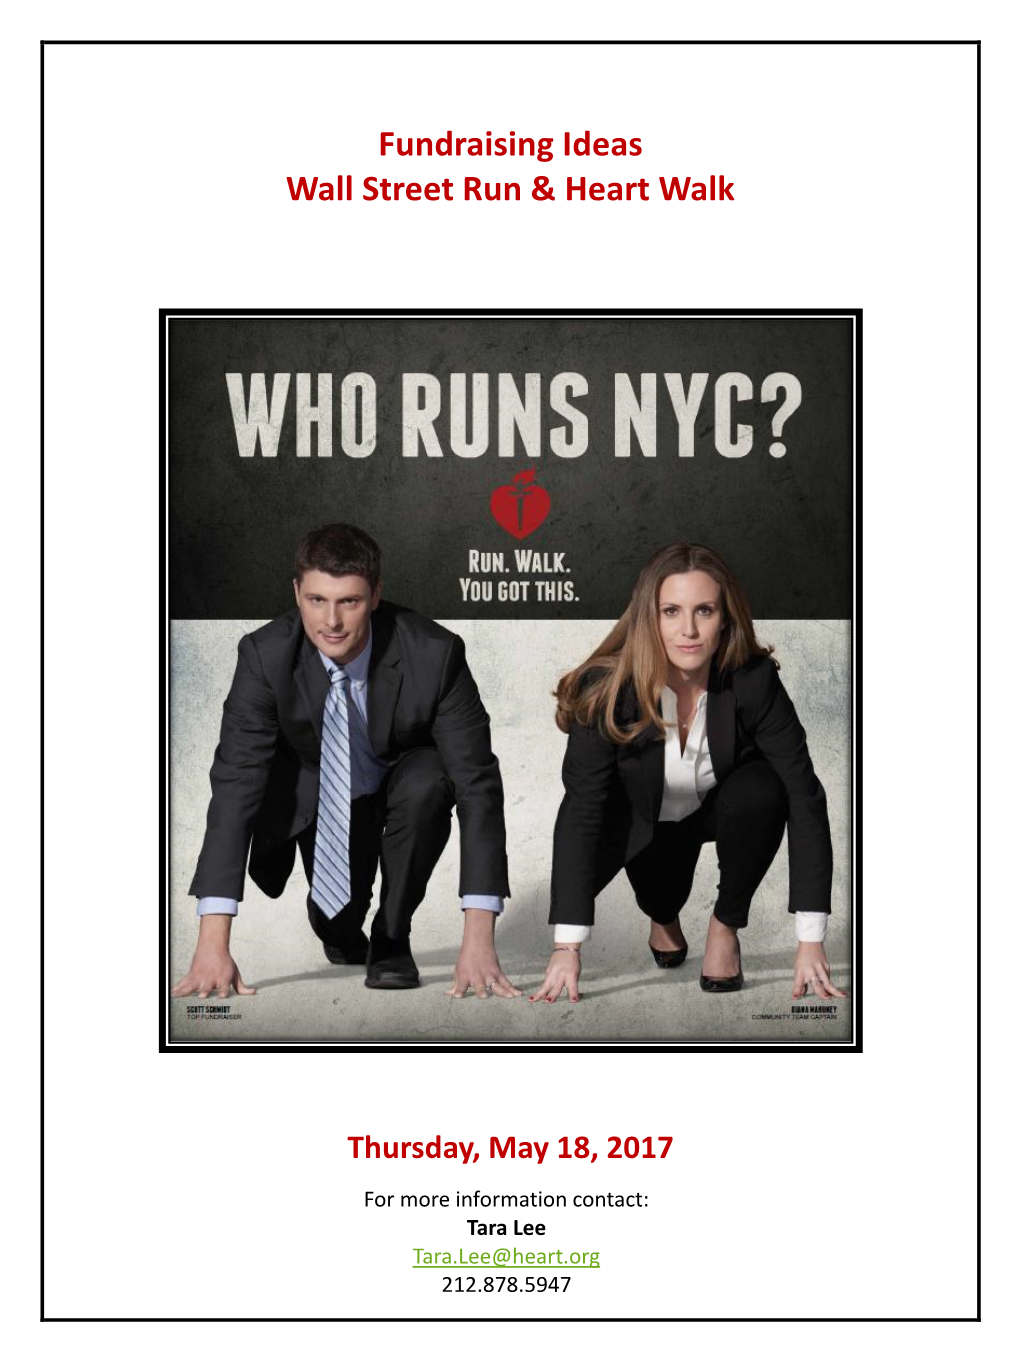 Fundraising Ideas Wall Street Run & Heart Walk